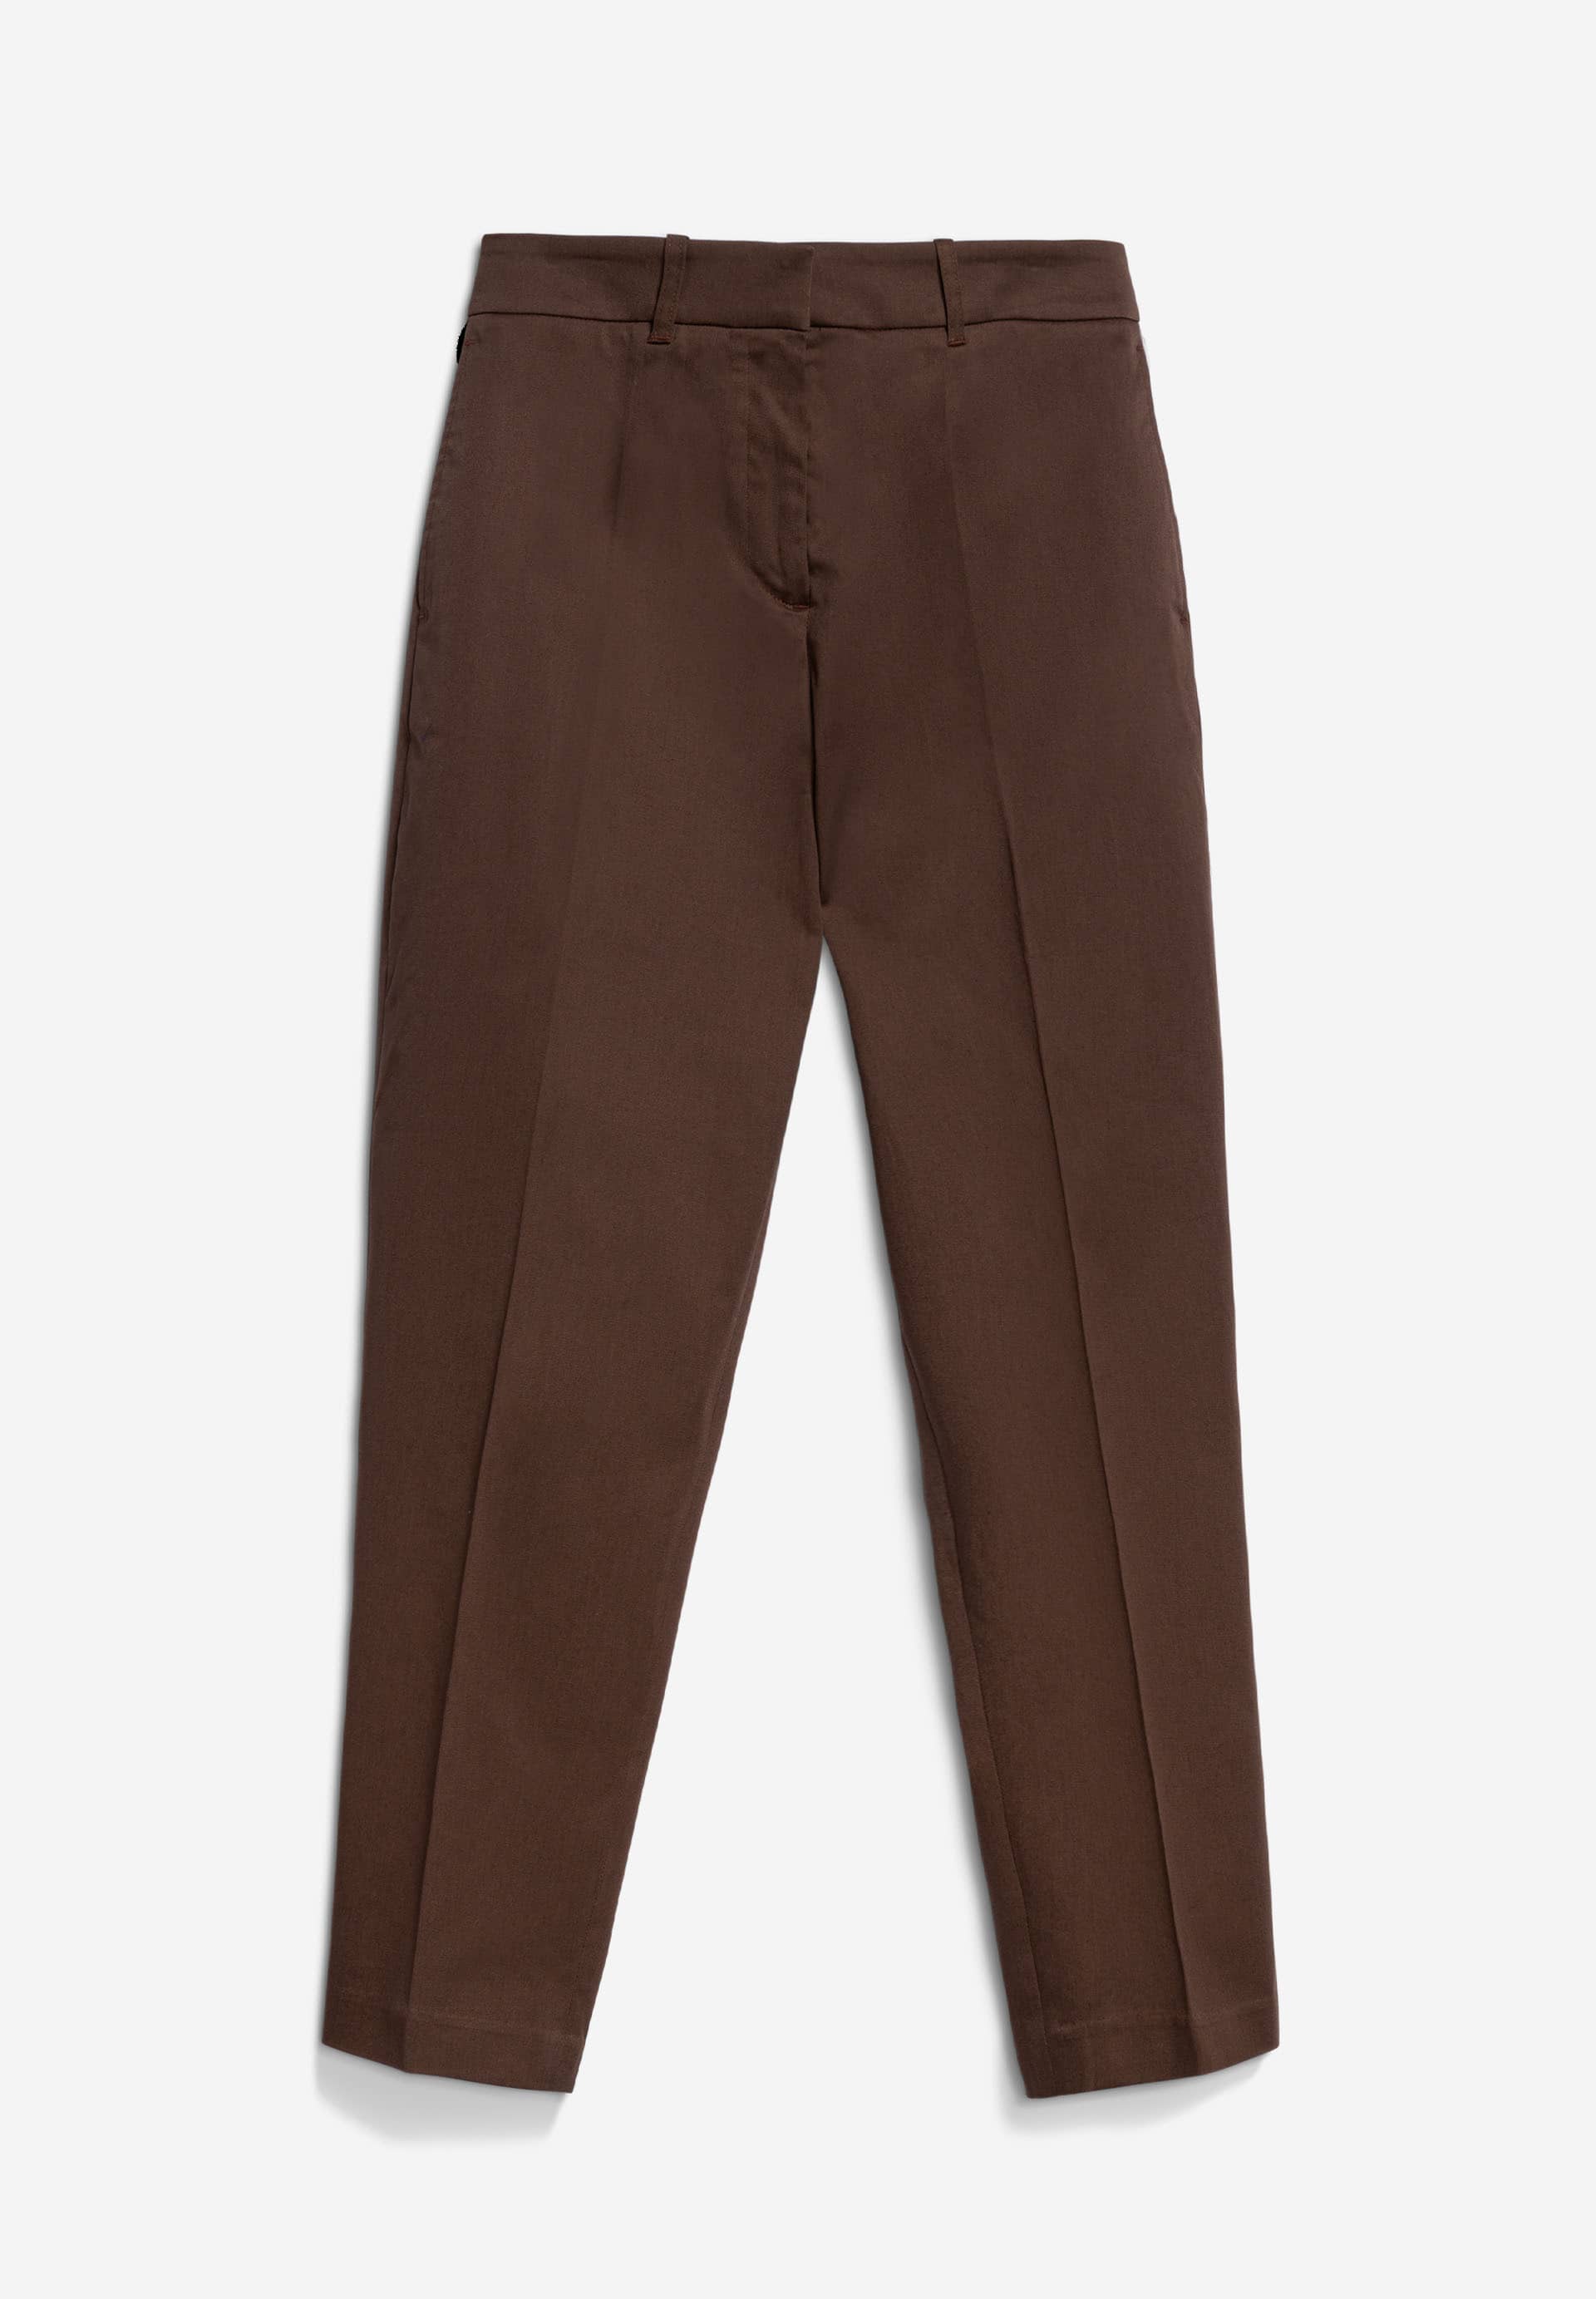 WARMAAR Woven Pants Regular Fit made of Organic Cotton Mix